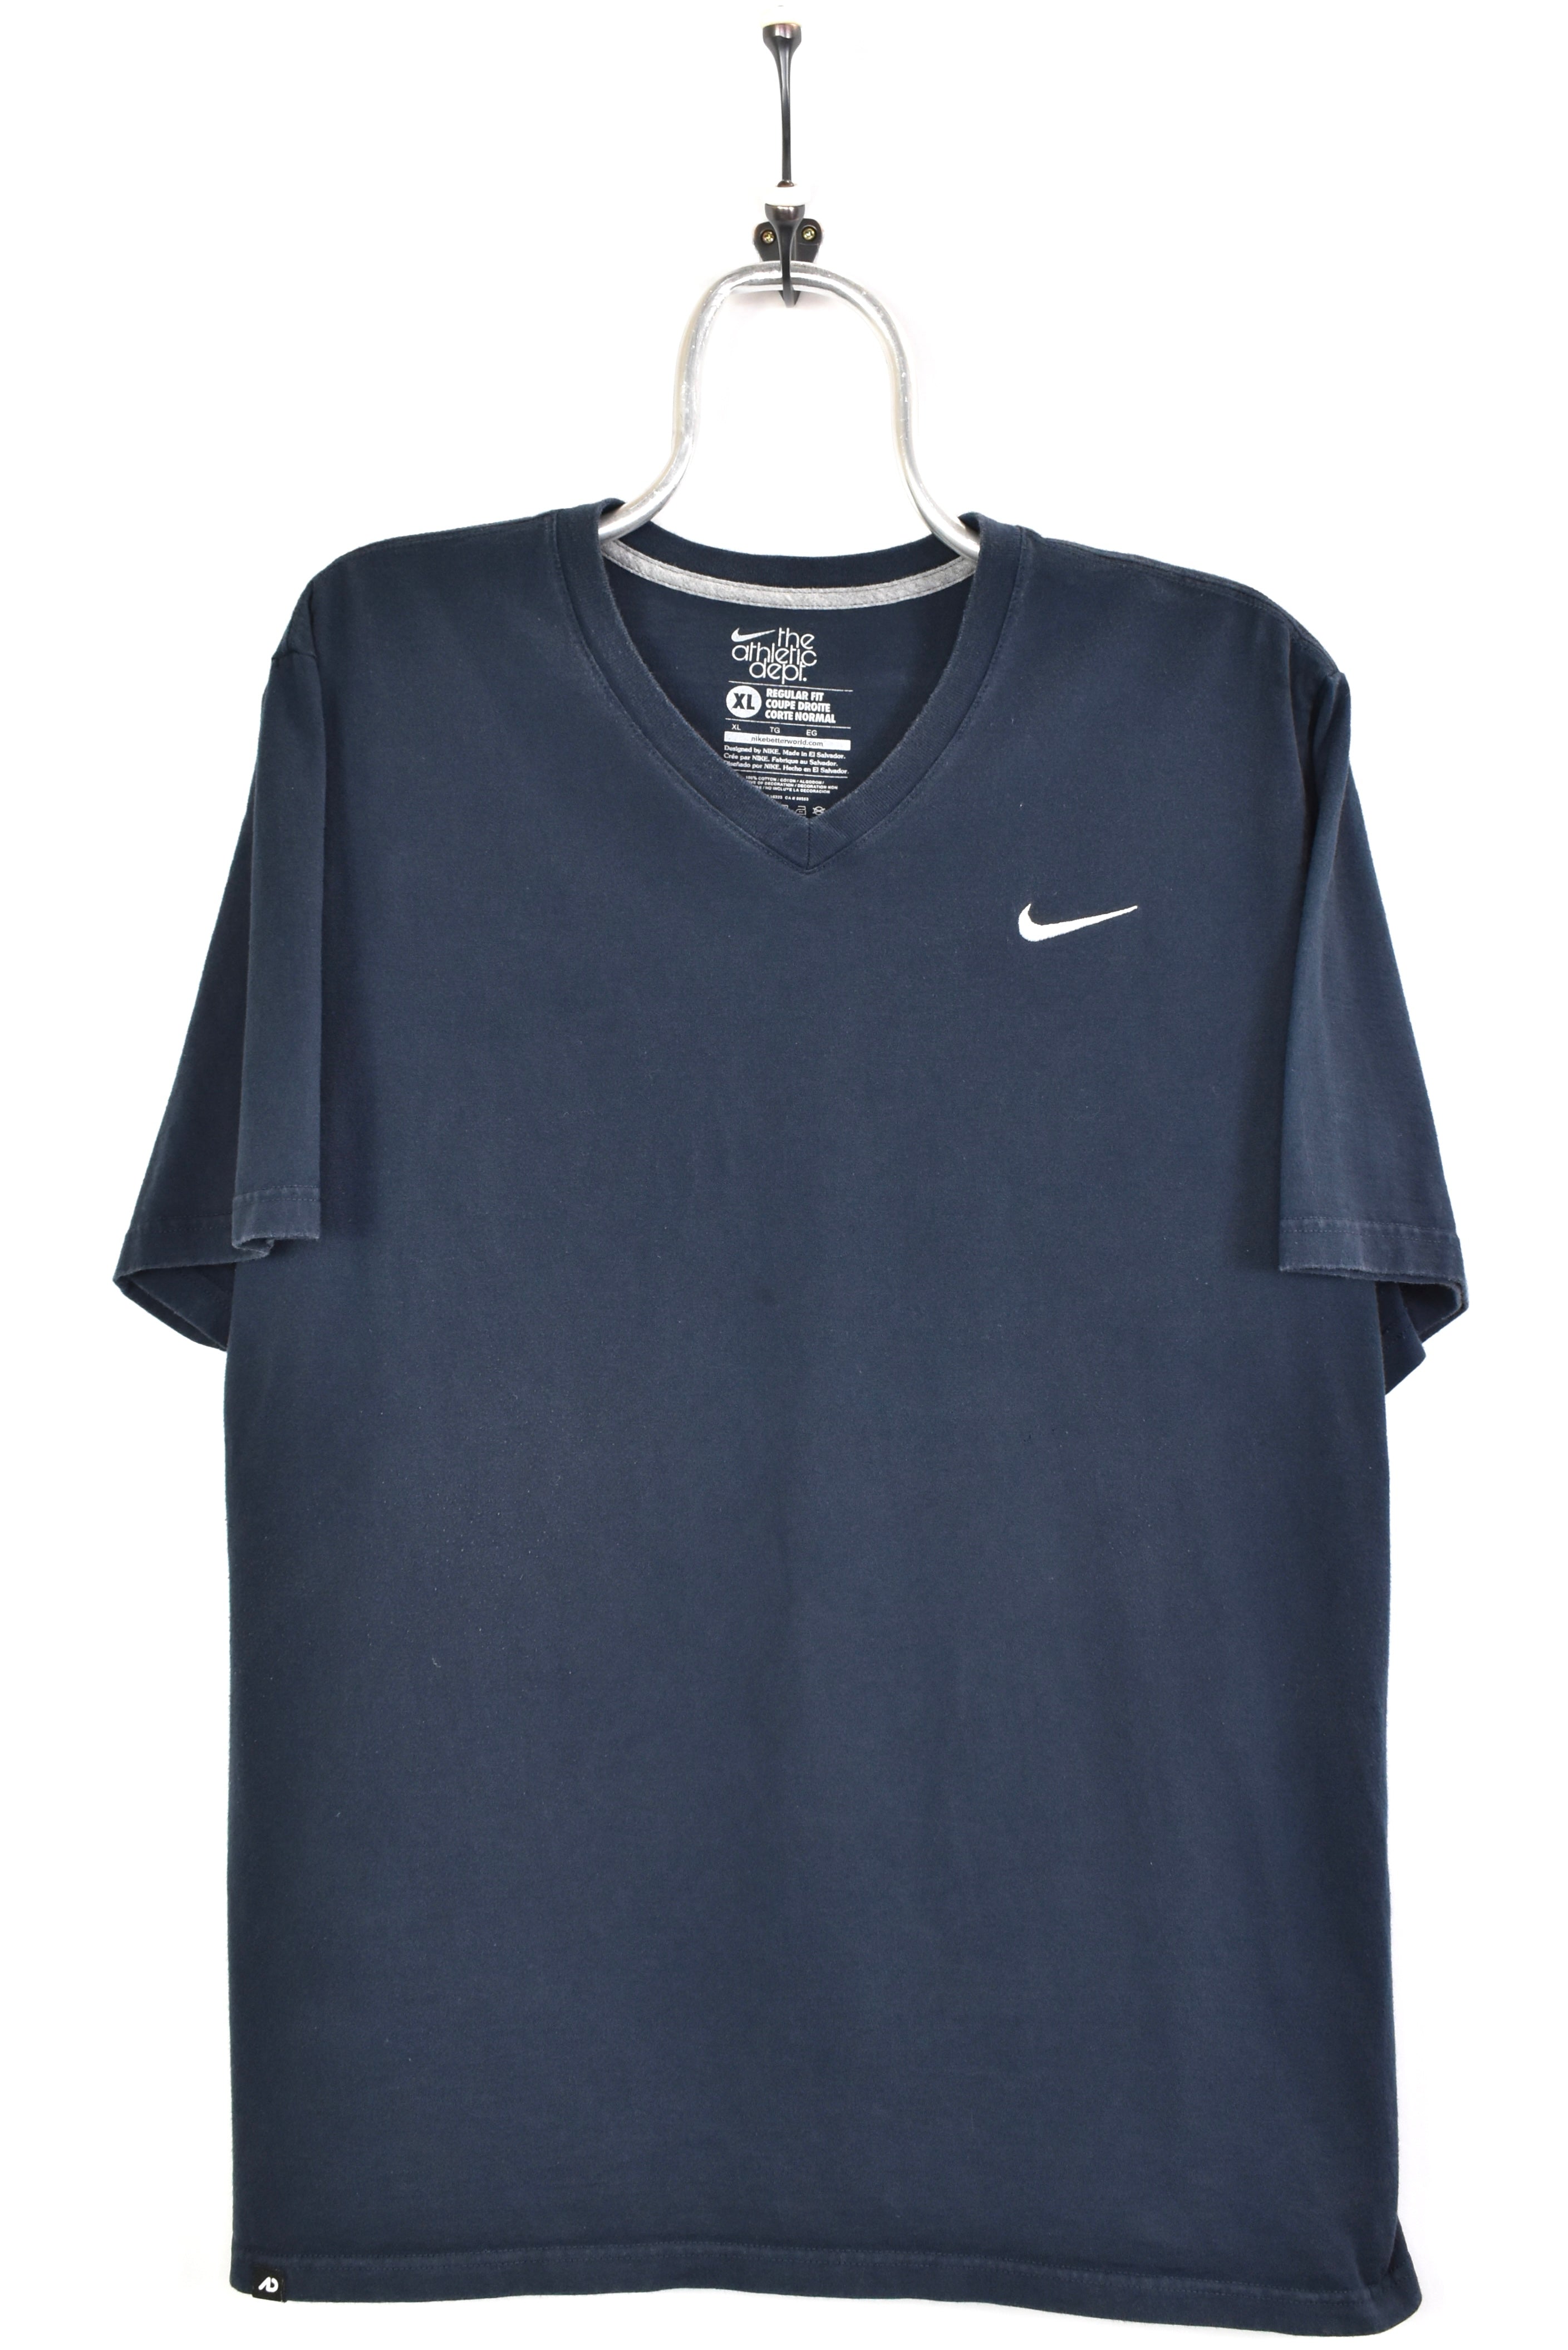 Modern Nike embroidered navy t-shirt | Large NIKE